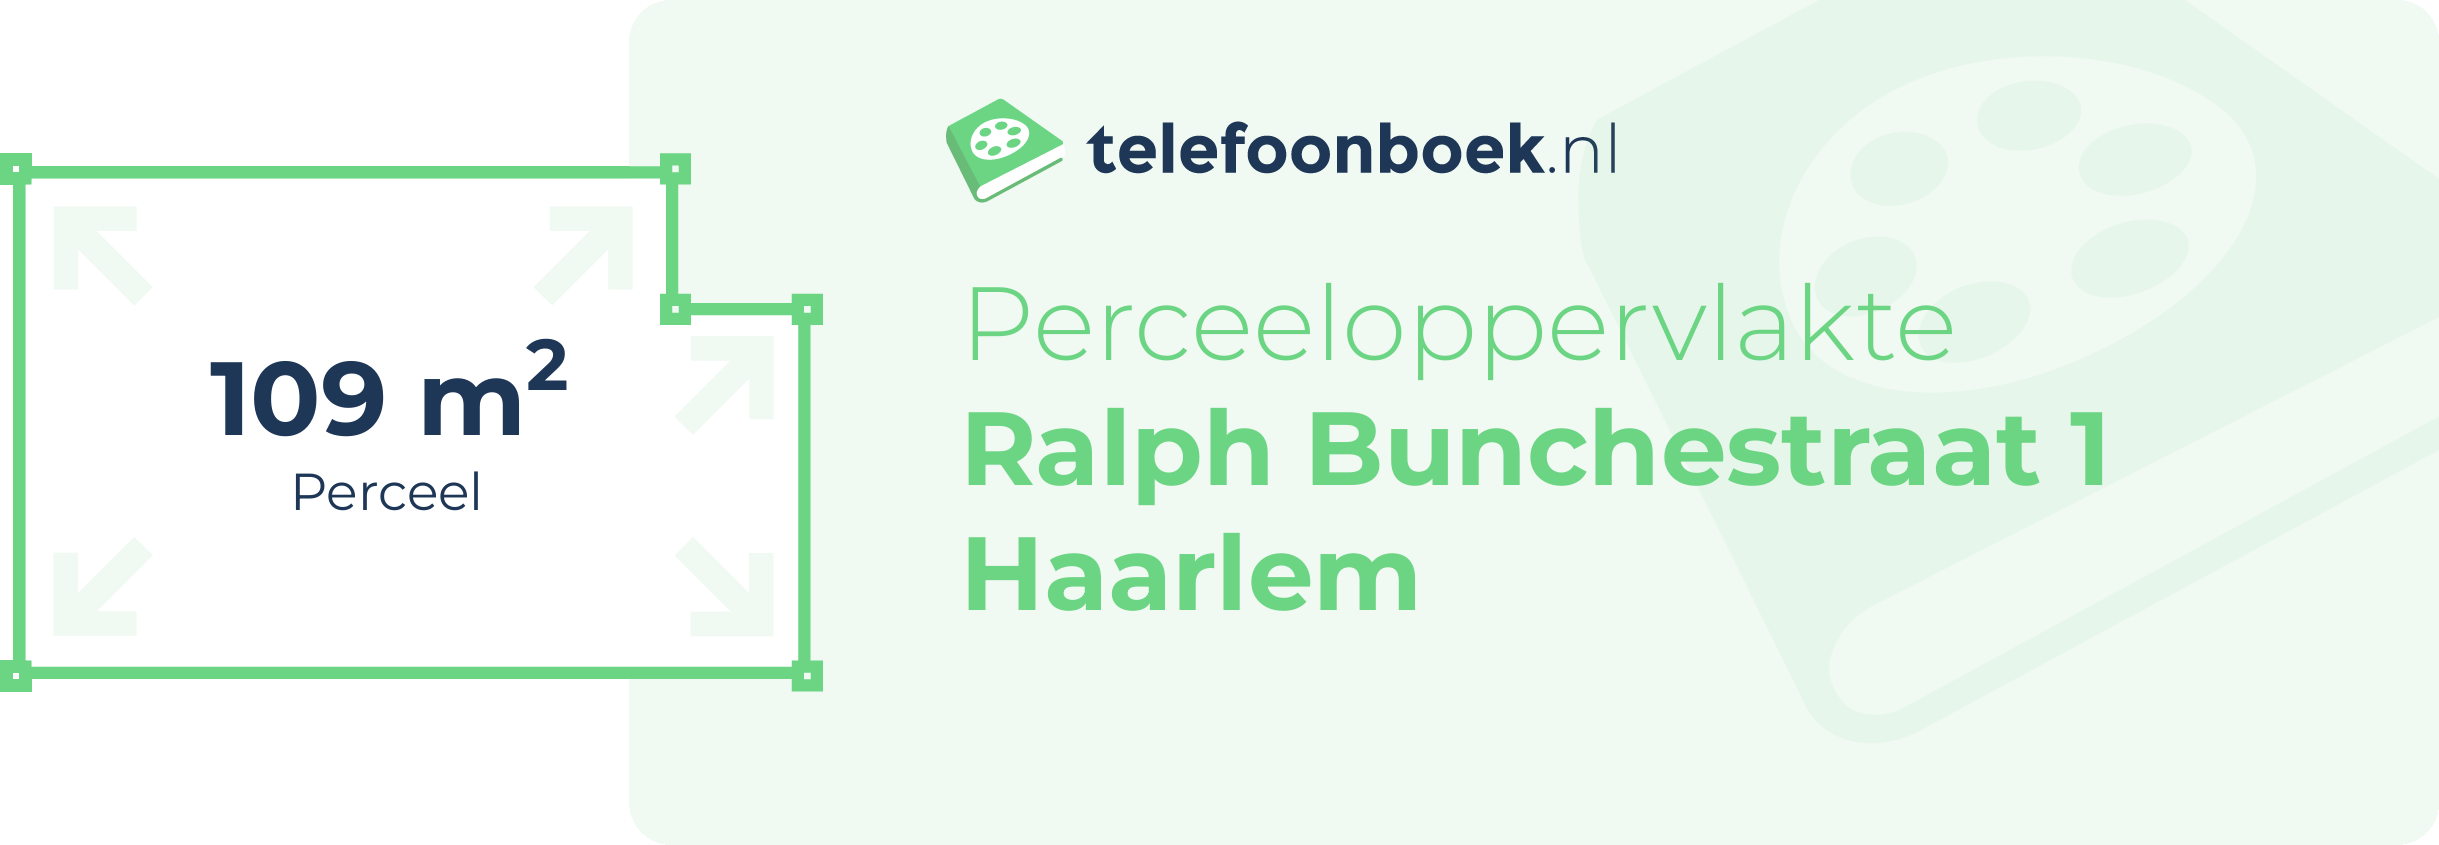 Perceeloppervlakte Ralph Bunchestraat 1 Haarlem